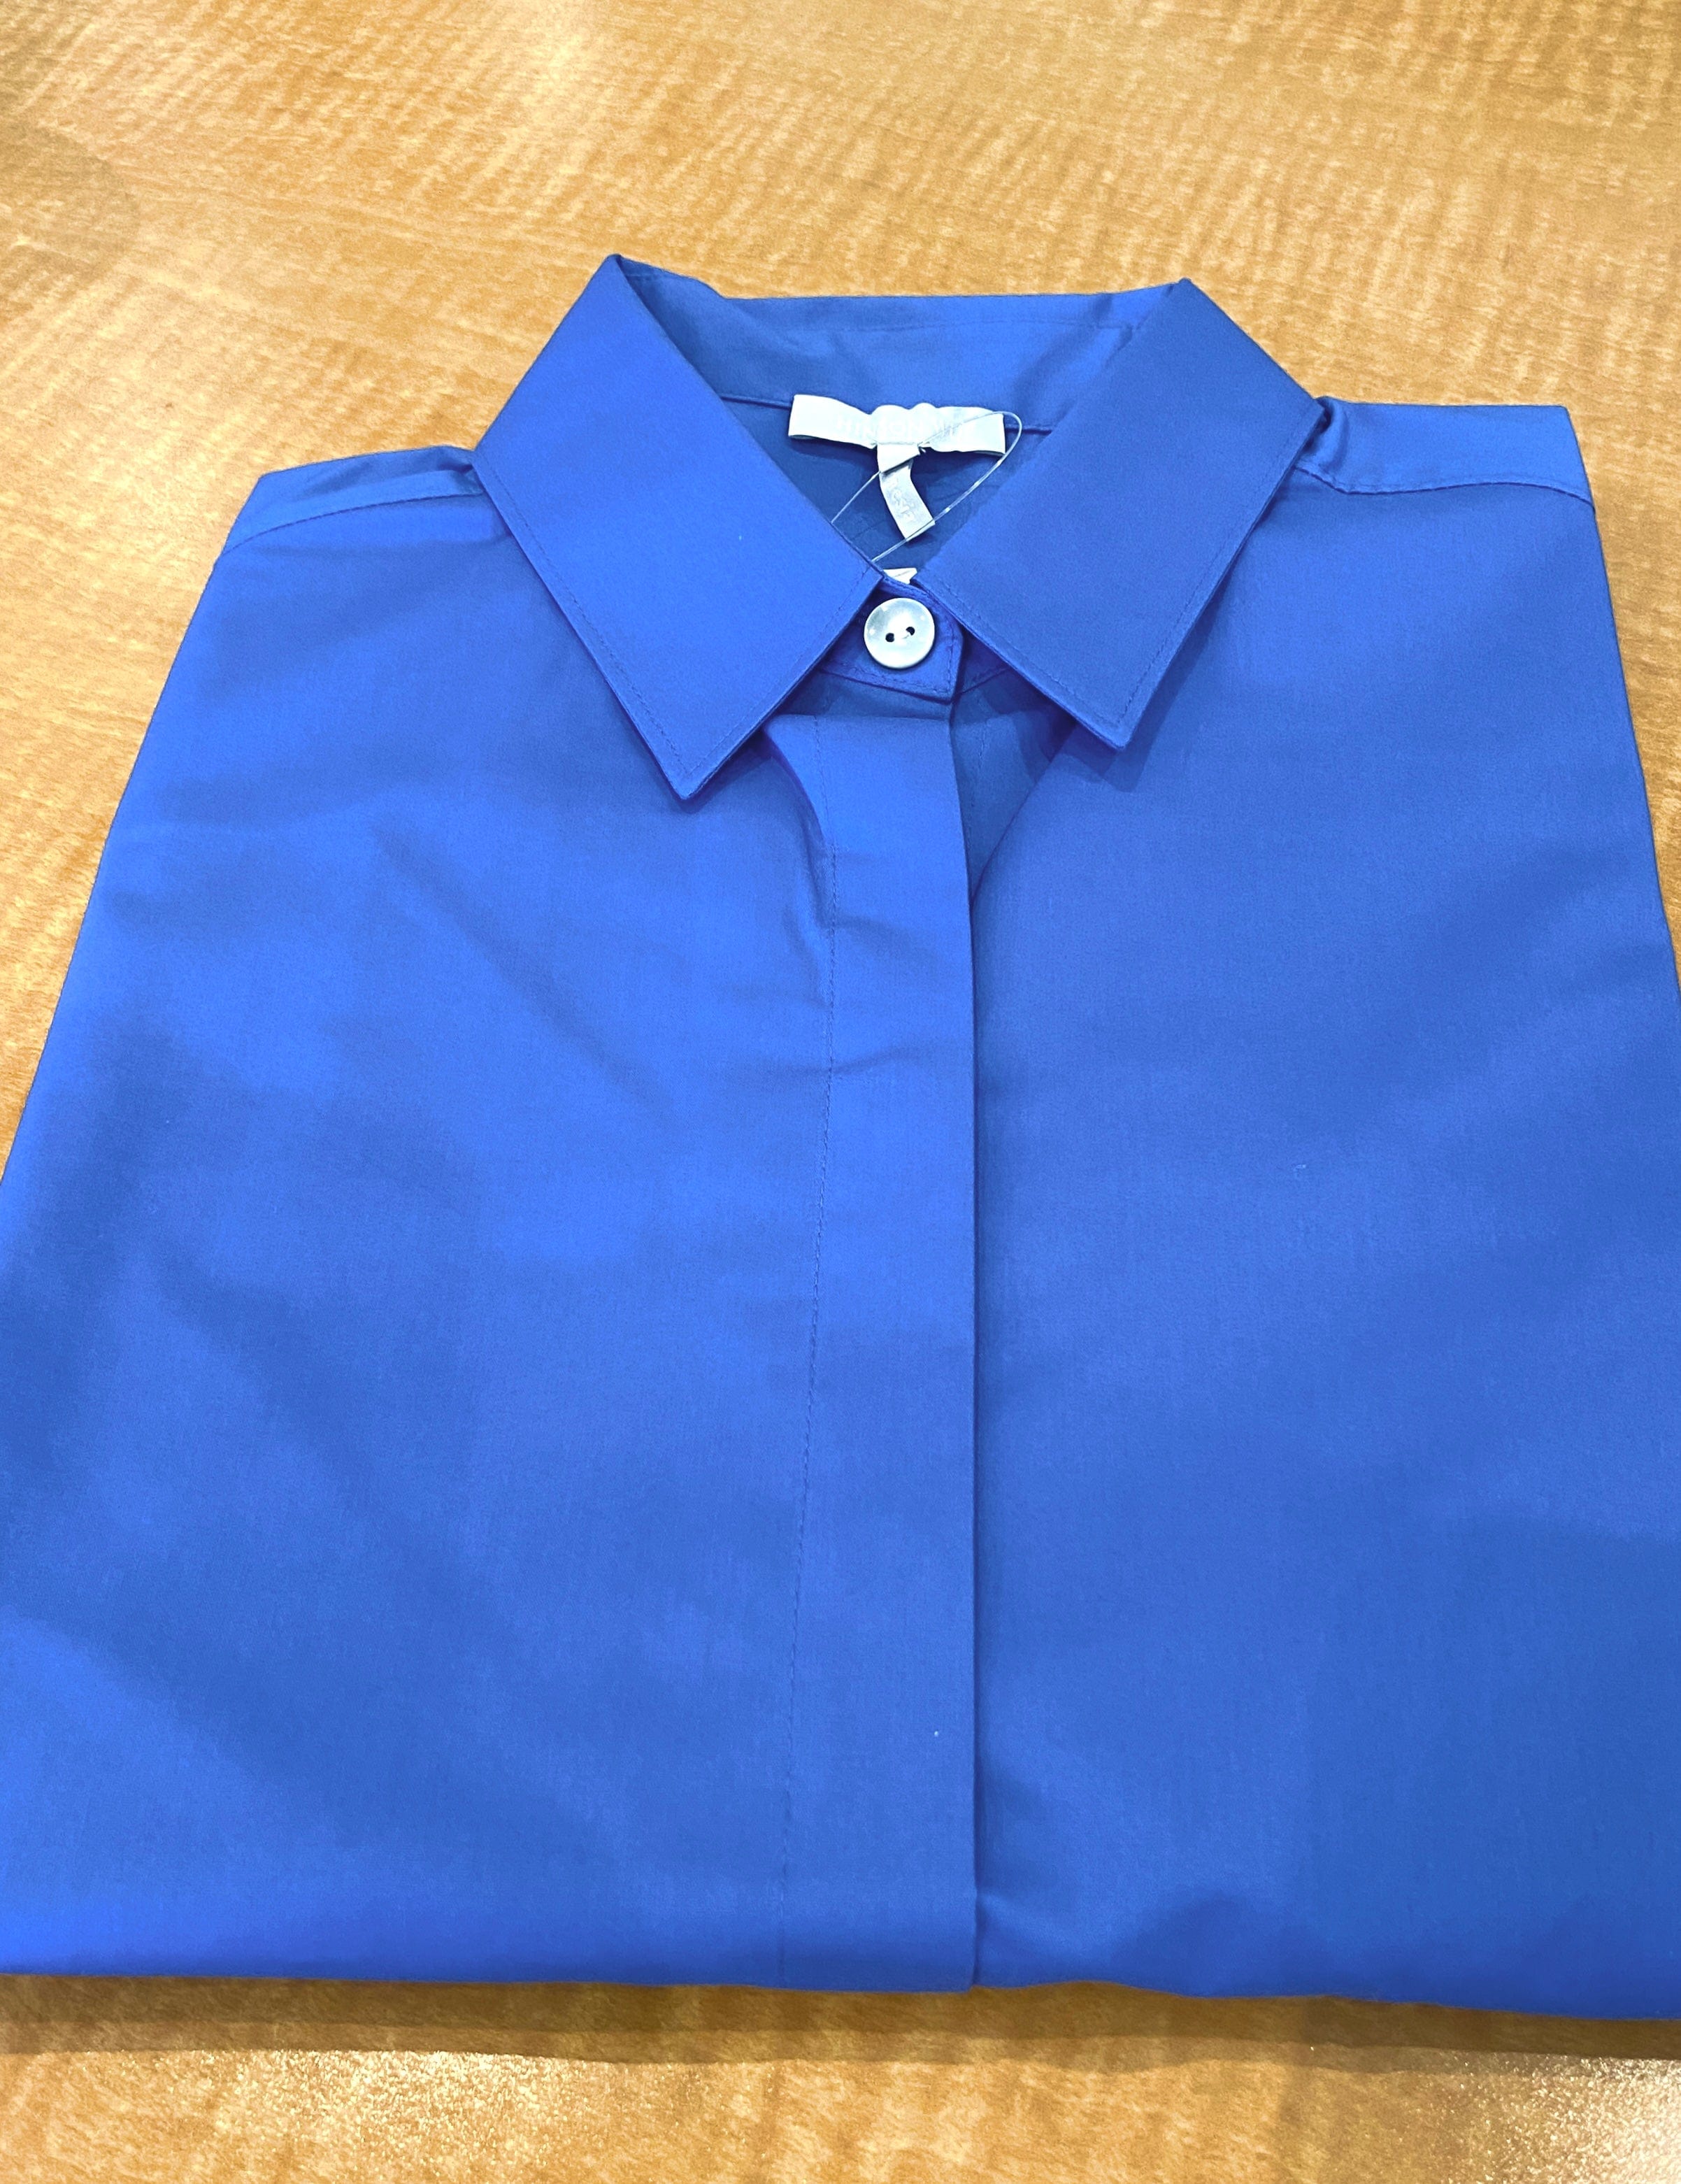 Hinson Wu Women's Shirts & Tops Marine Blue / Extra Small Hinson Wu Maxine Top 3/4 Sleeve